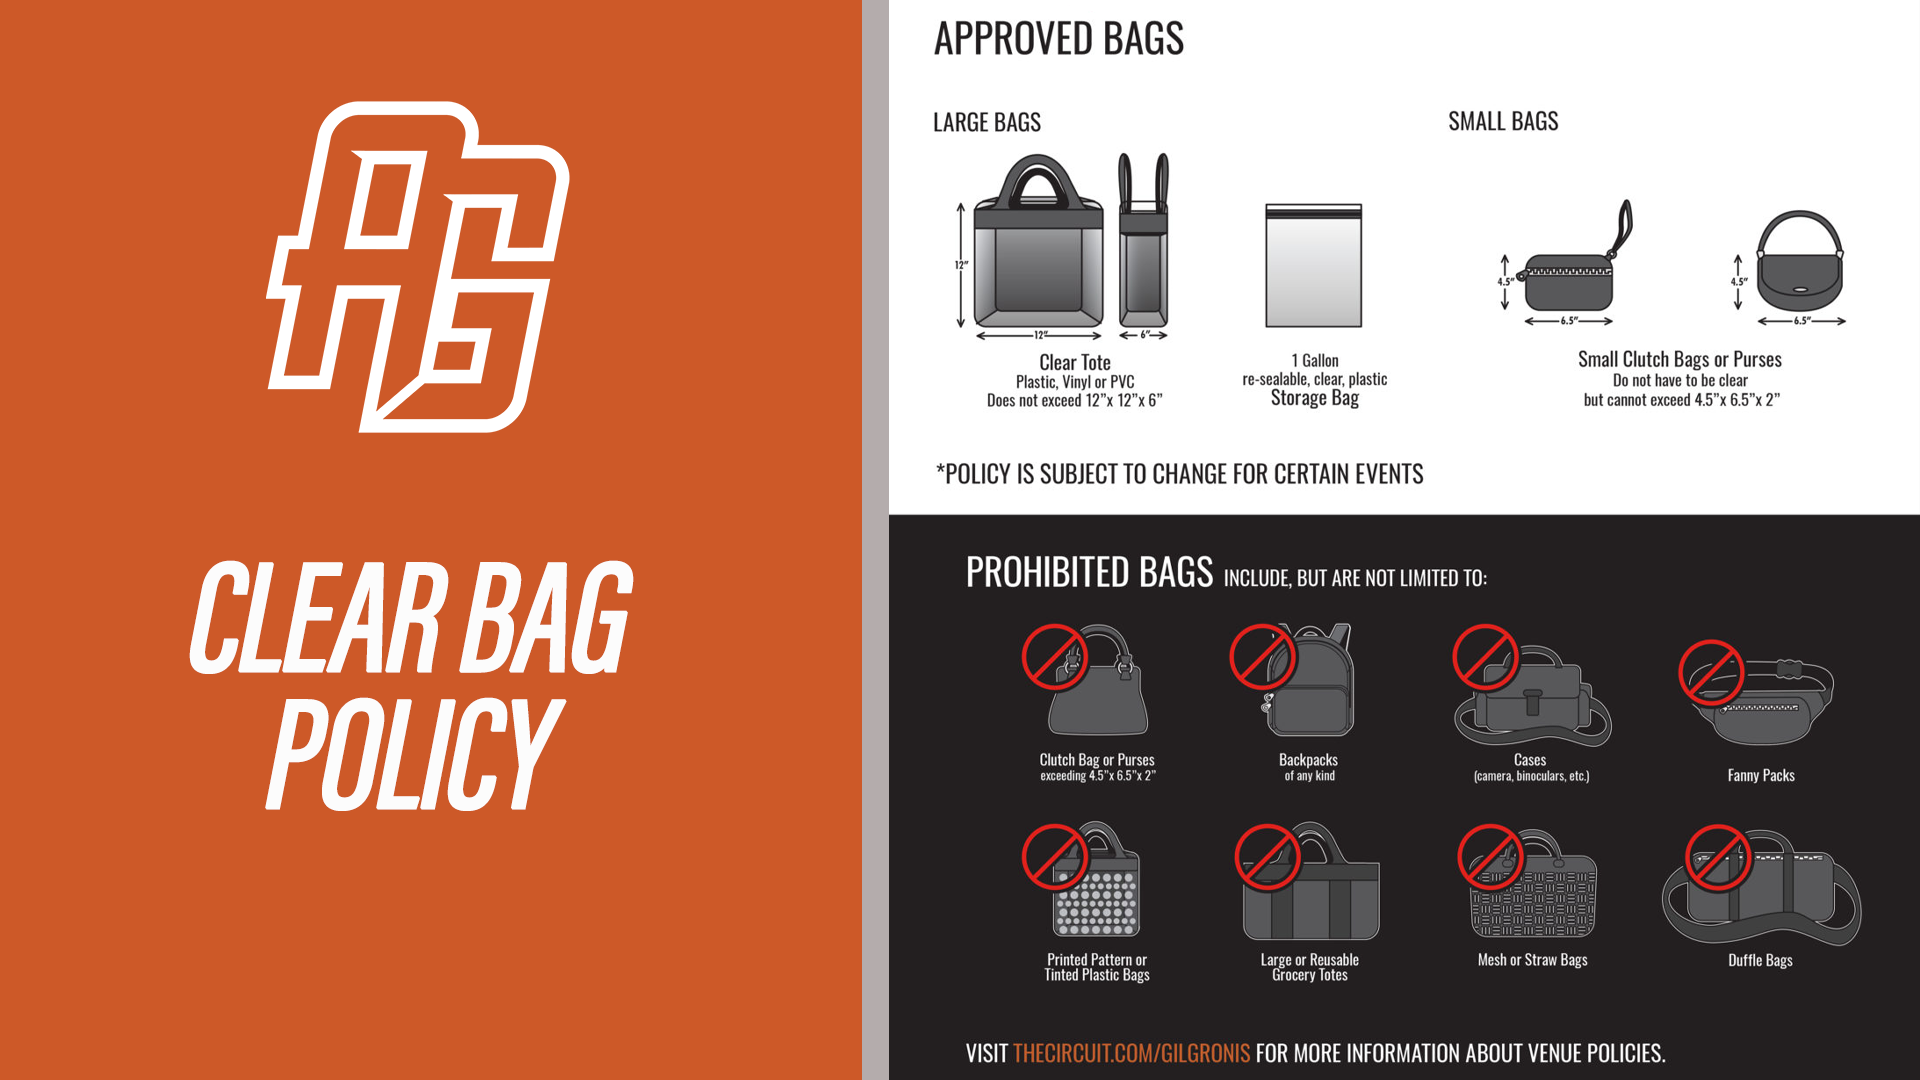 Neyland Stadium Bag Policy –